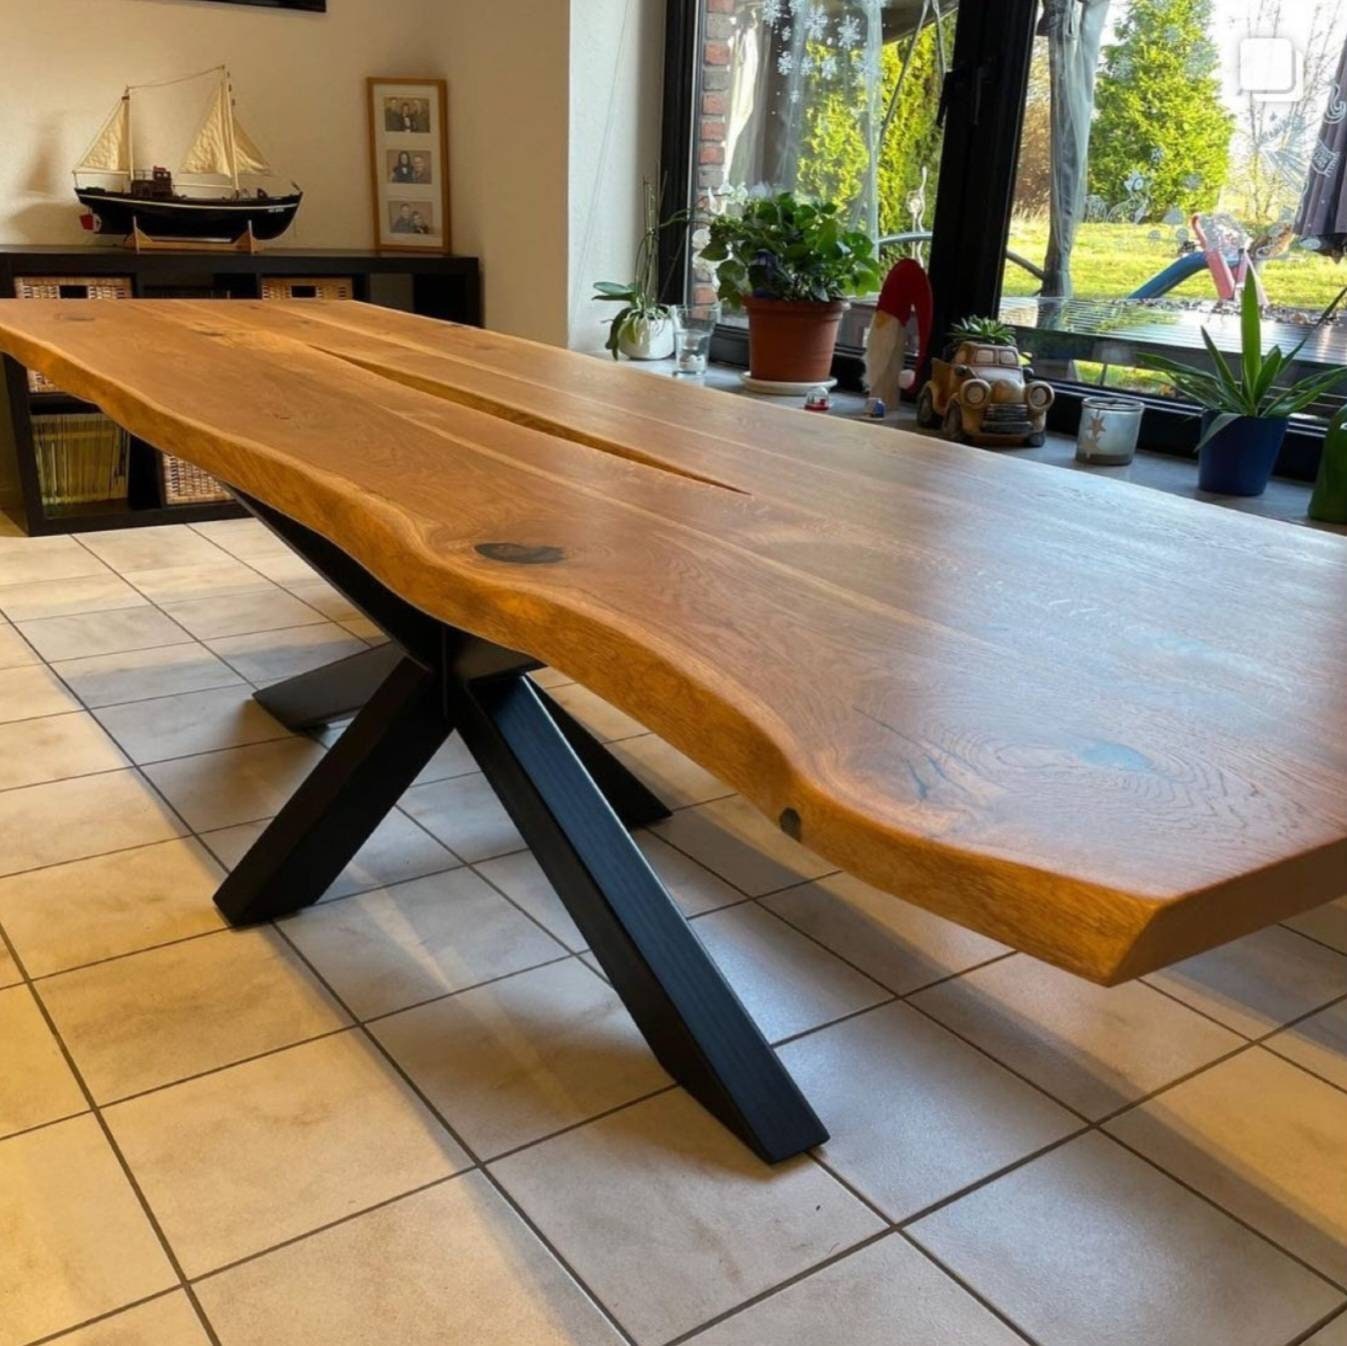 Straight edge table